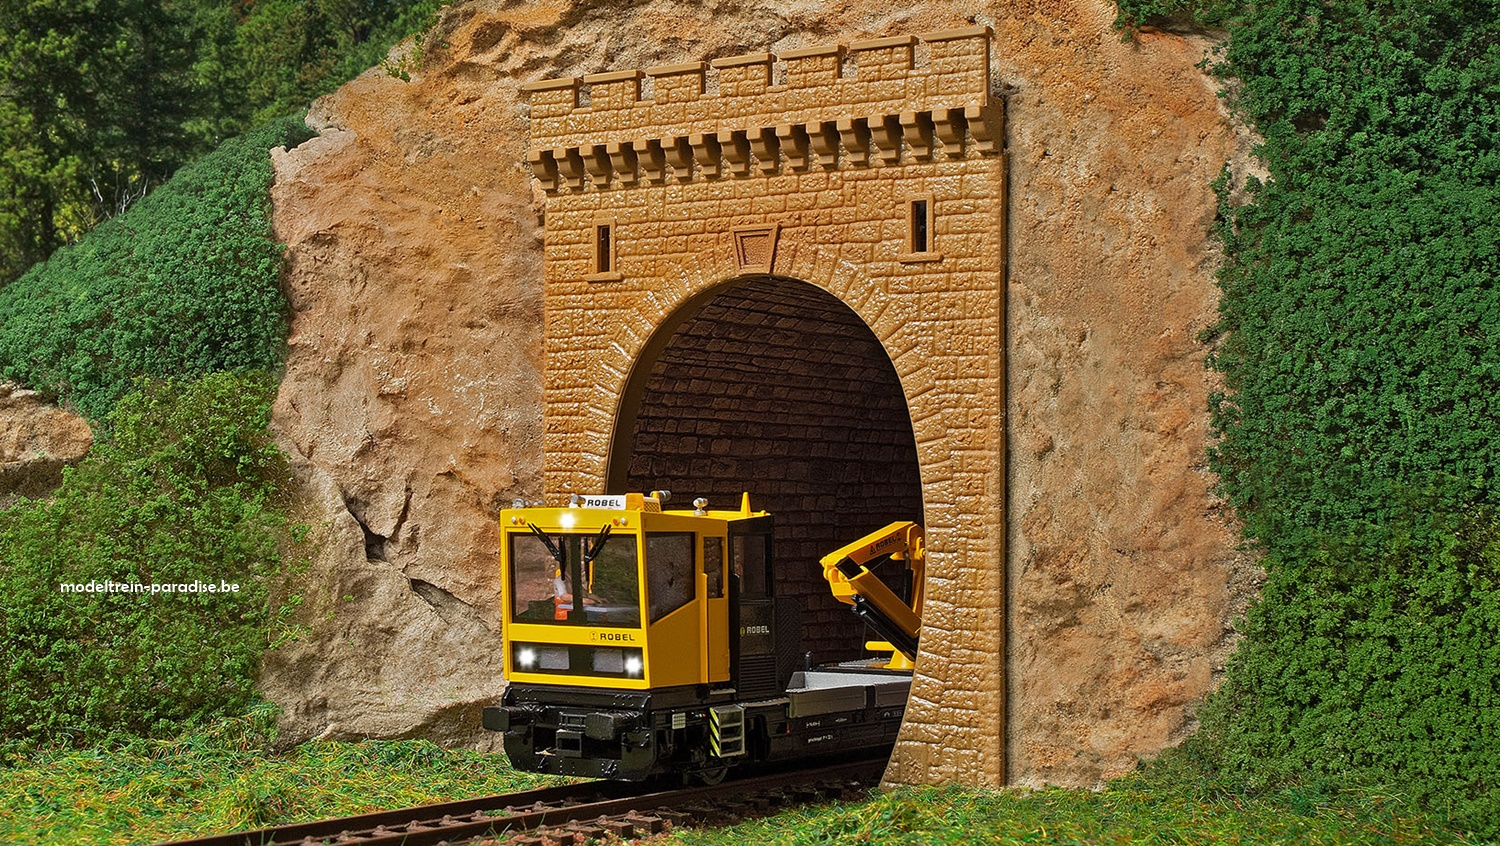 42501 ... Tunnelportaal, 1 spoor